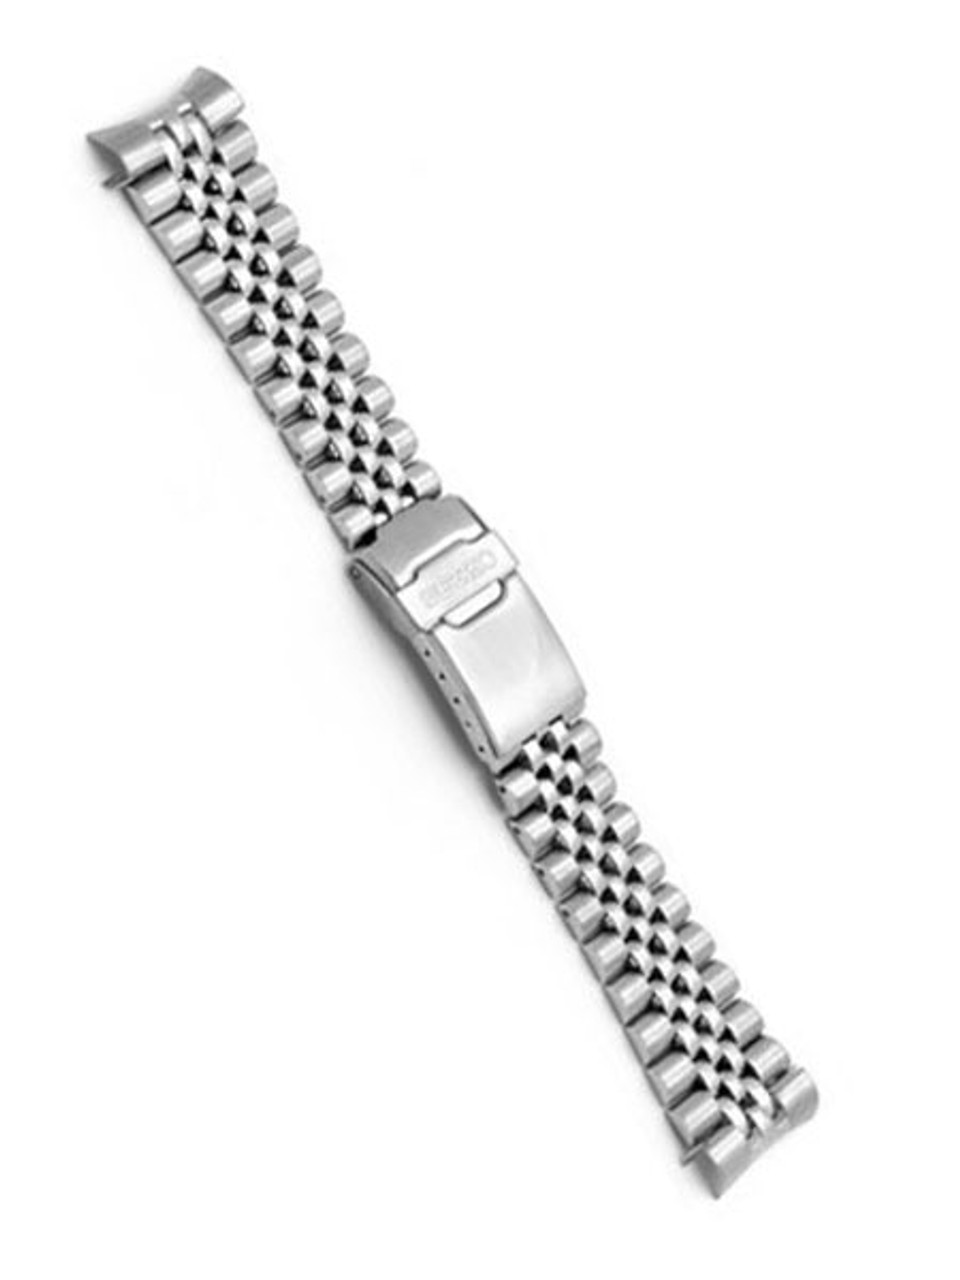 Seiko OEM Brushed Finish SKX007 Bracelet #44G1ZZG (22mm)